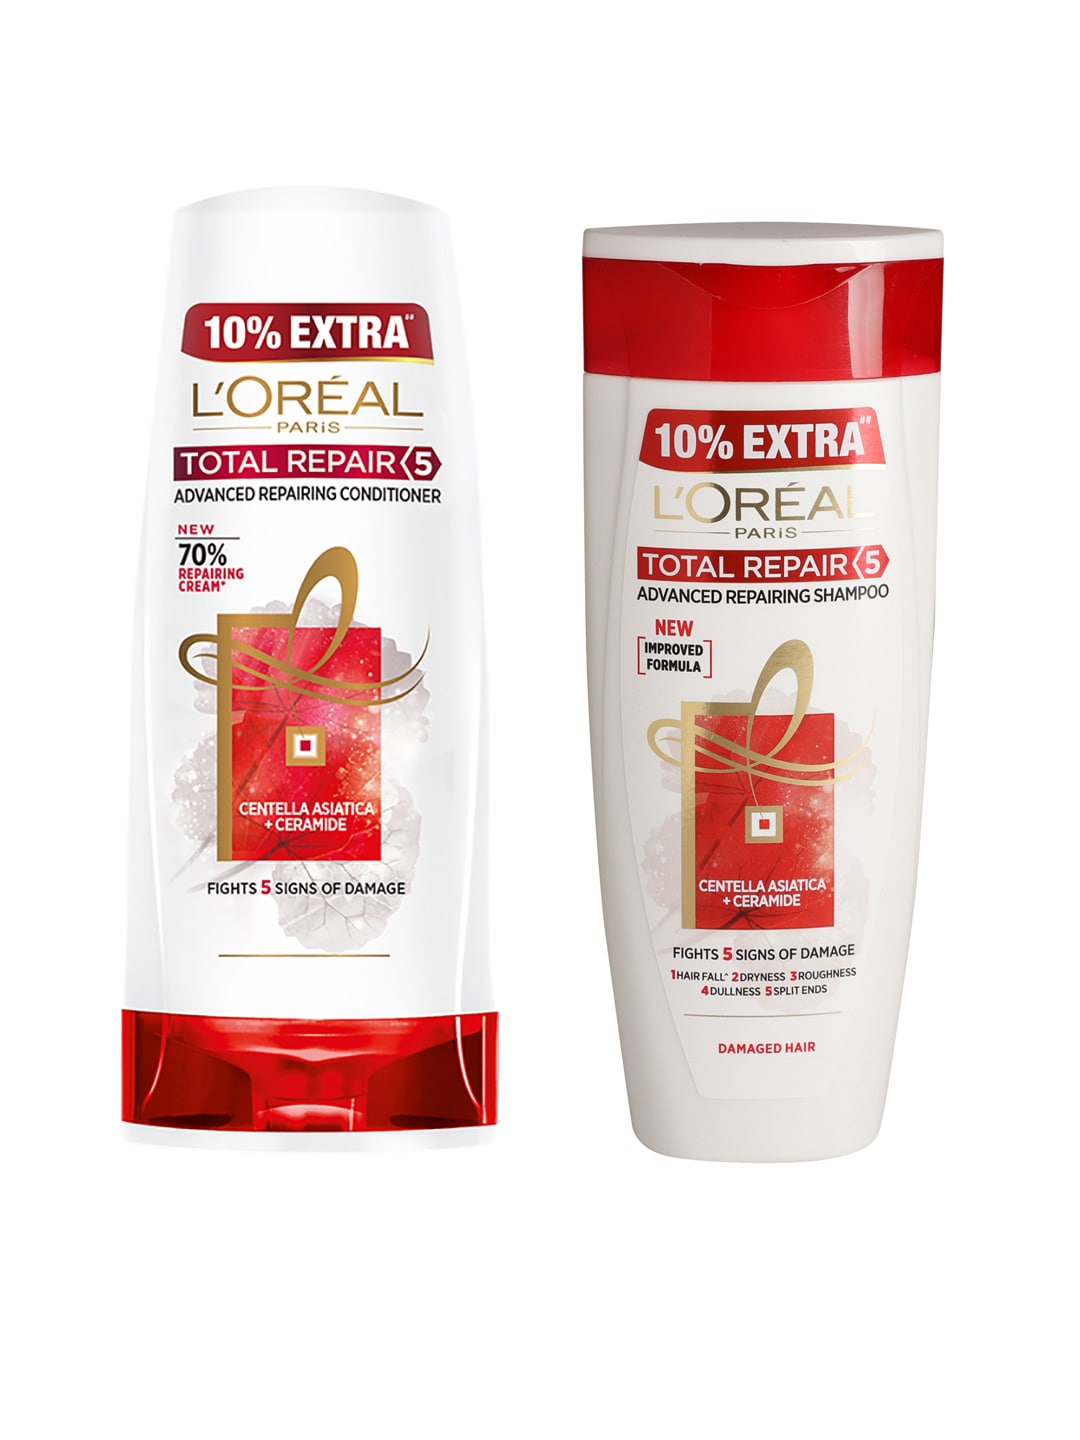 LOreal Set Of Total Repair 5 Shampoo & Conditioner Price in India